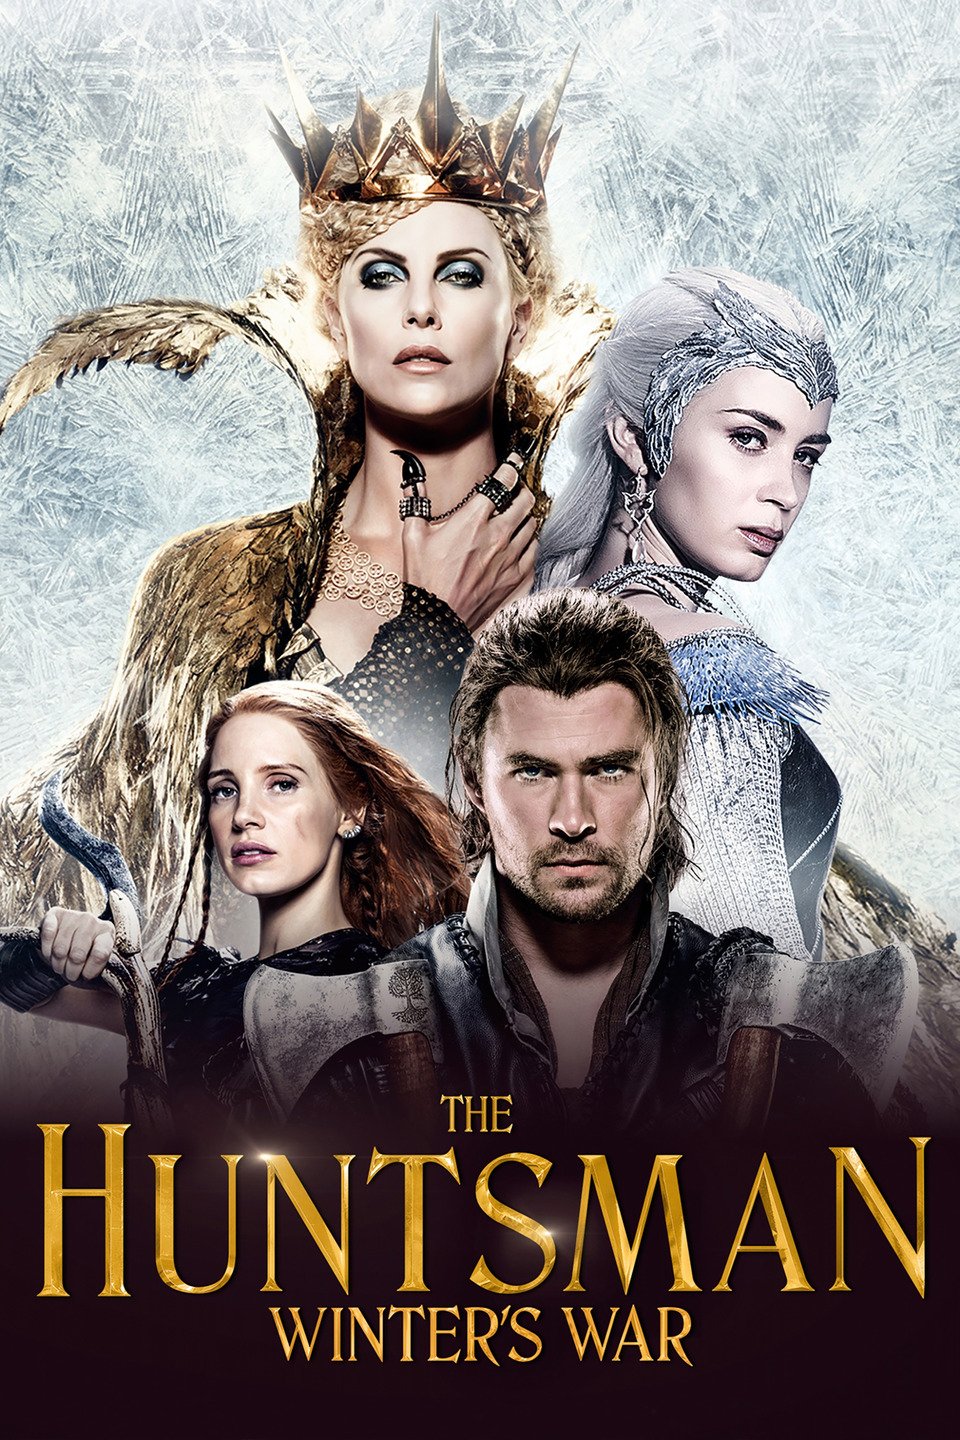 [MINI Super-HQ] The Huntsman: Winter’s War (2016) พรานป่าและราชินีน้ำแข็ง ภาค 2 [1080p] [EXTENDED] [พากย์ไทย DTS + เสียงอังกฤษ DTS] [บรรยายไทย + อังกฤษ] [เสียงไทย + ซับไทย] [OPENLOAD]